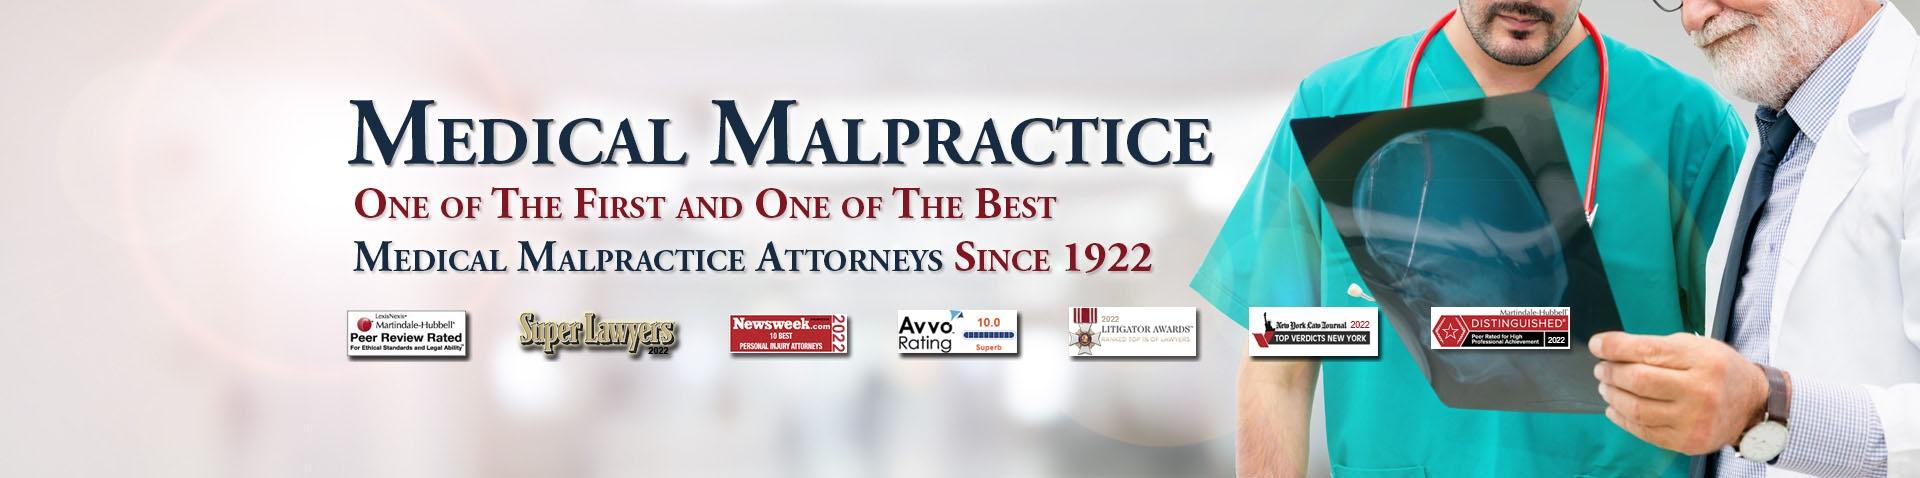  Medical Malpractice Law Firms New York